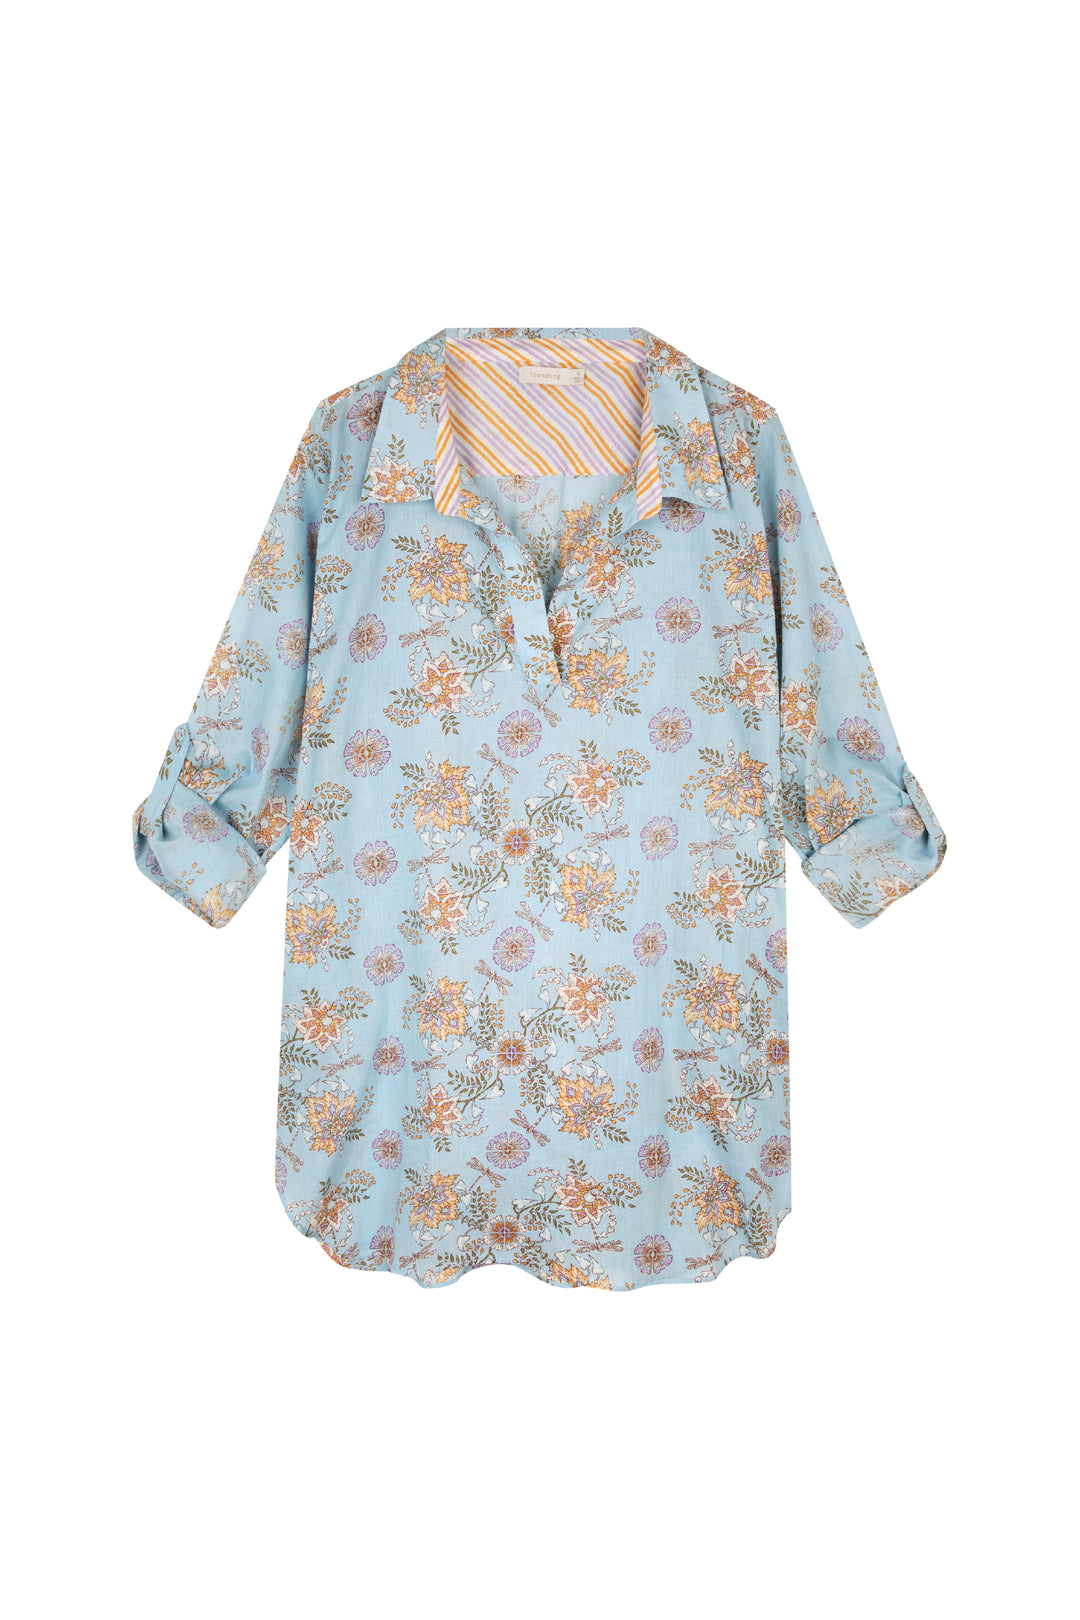 blue floral cotton beach shirt summer popover